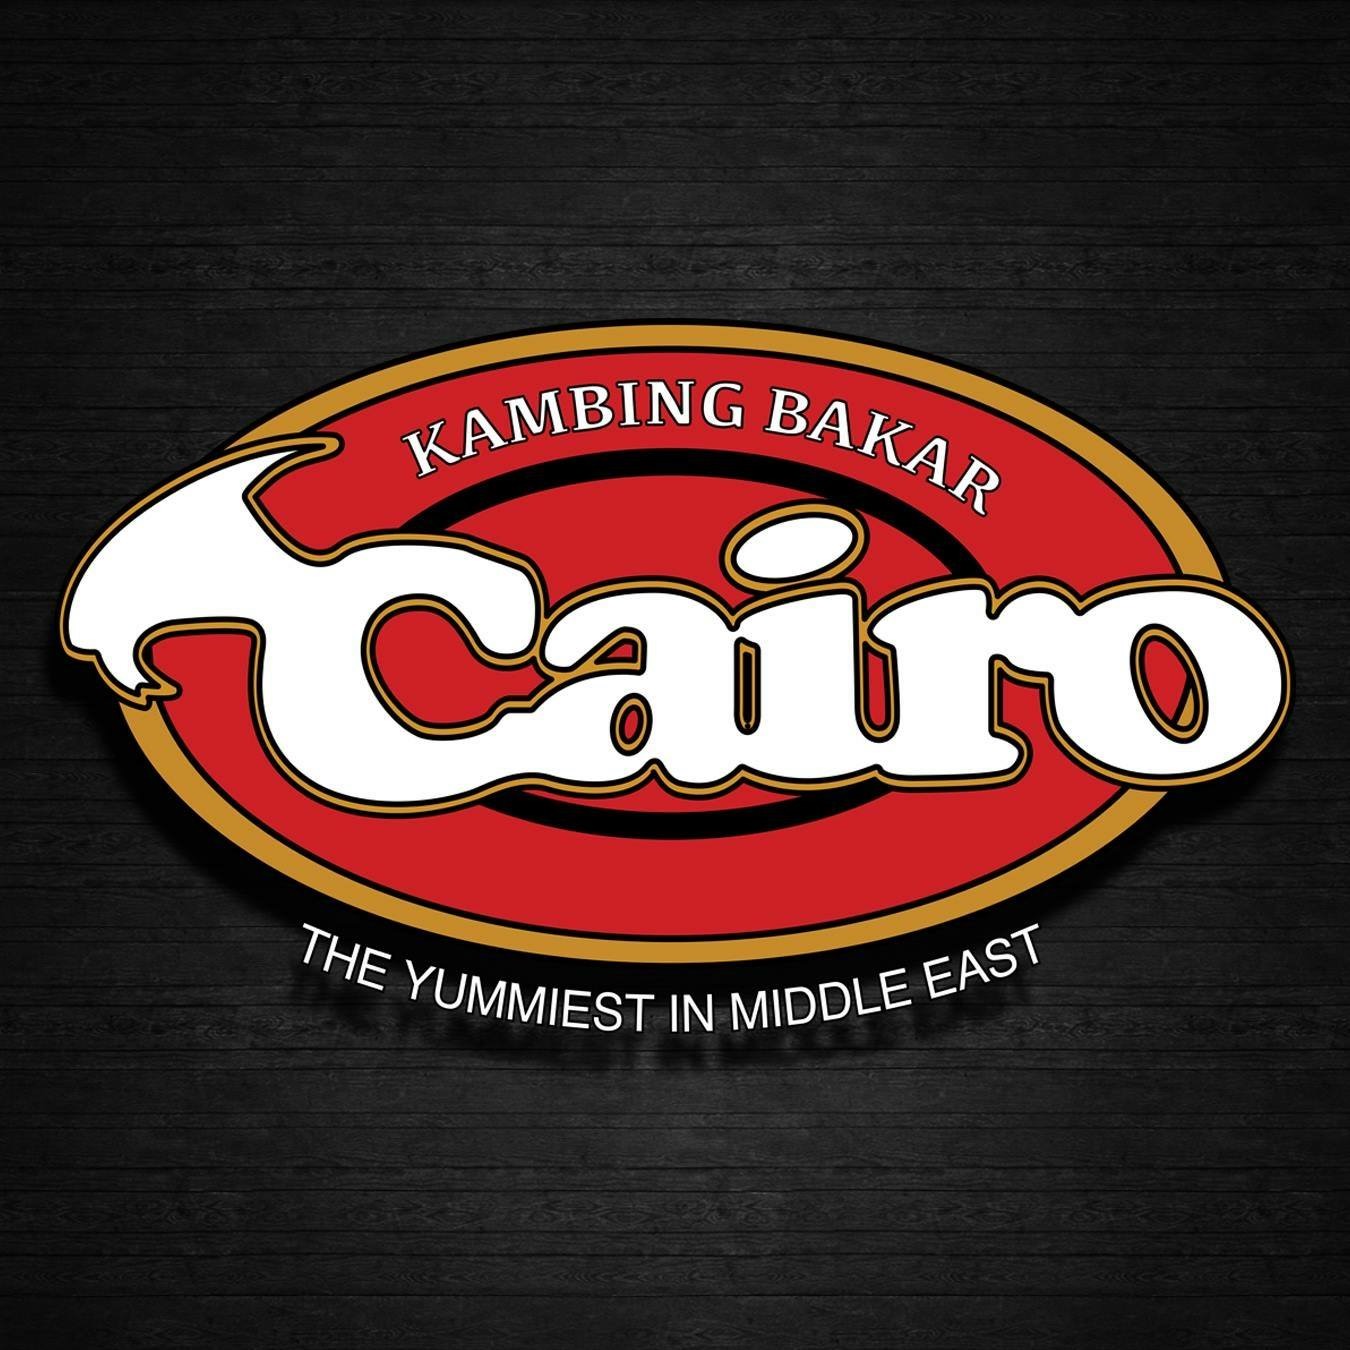 Kambing Bakar Cairo logo